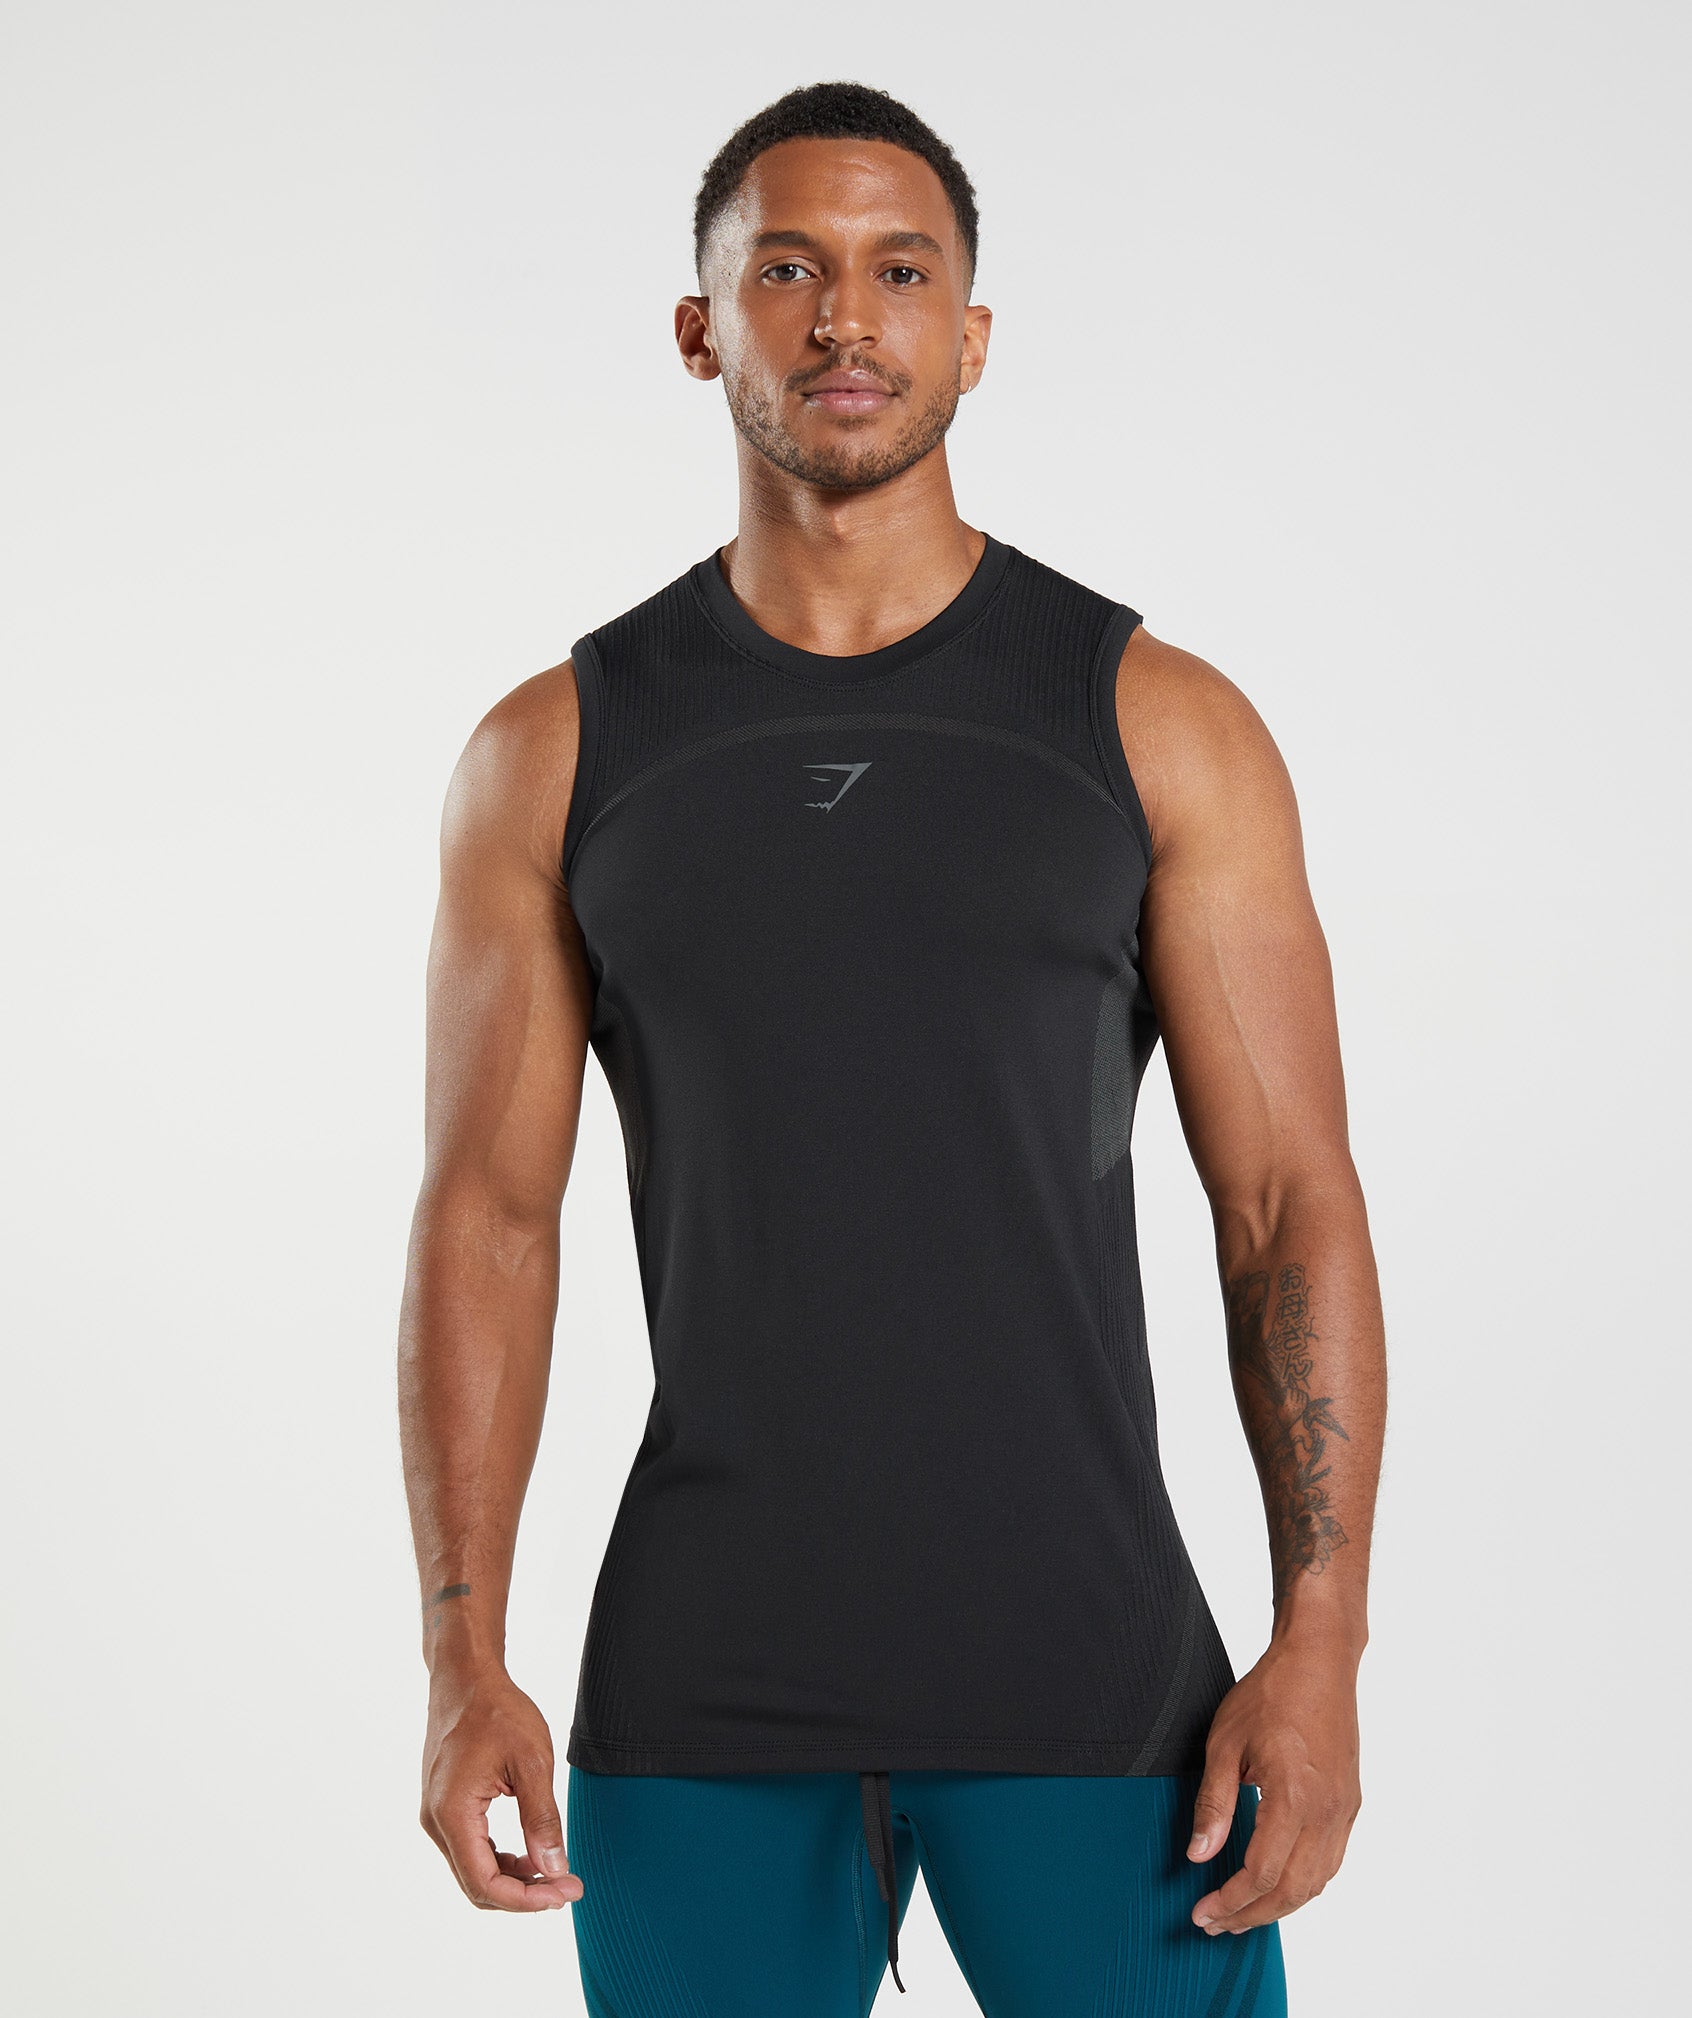 Professional Gymshark Brand Men's Tank Top Bodybuilding Clothing Gym Shark  Musculation Fsiculturismo Camiseta Regata Fitness - AliExpress